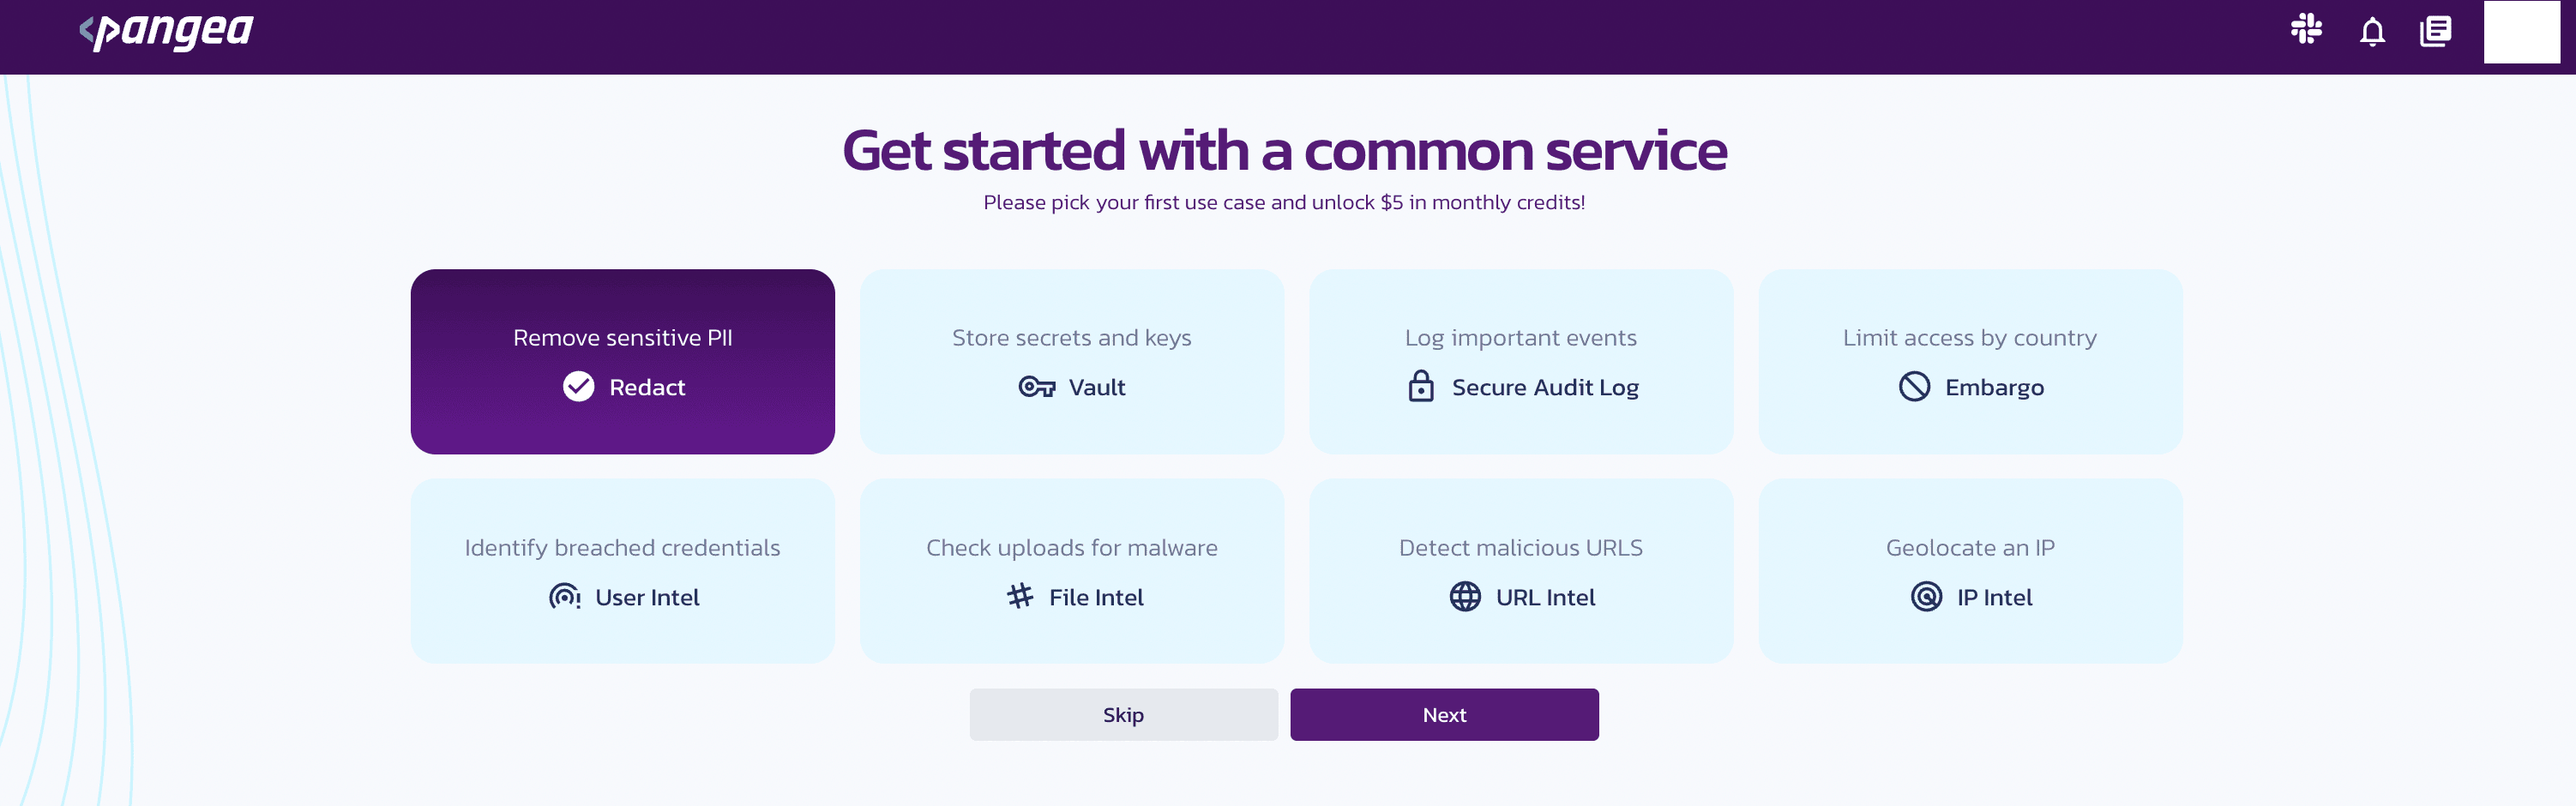 Select a service